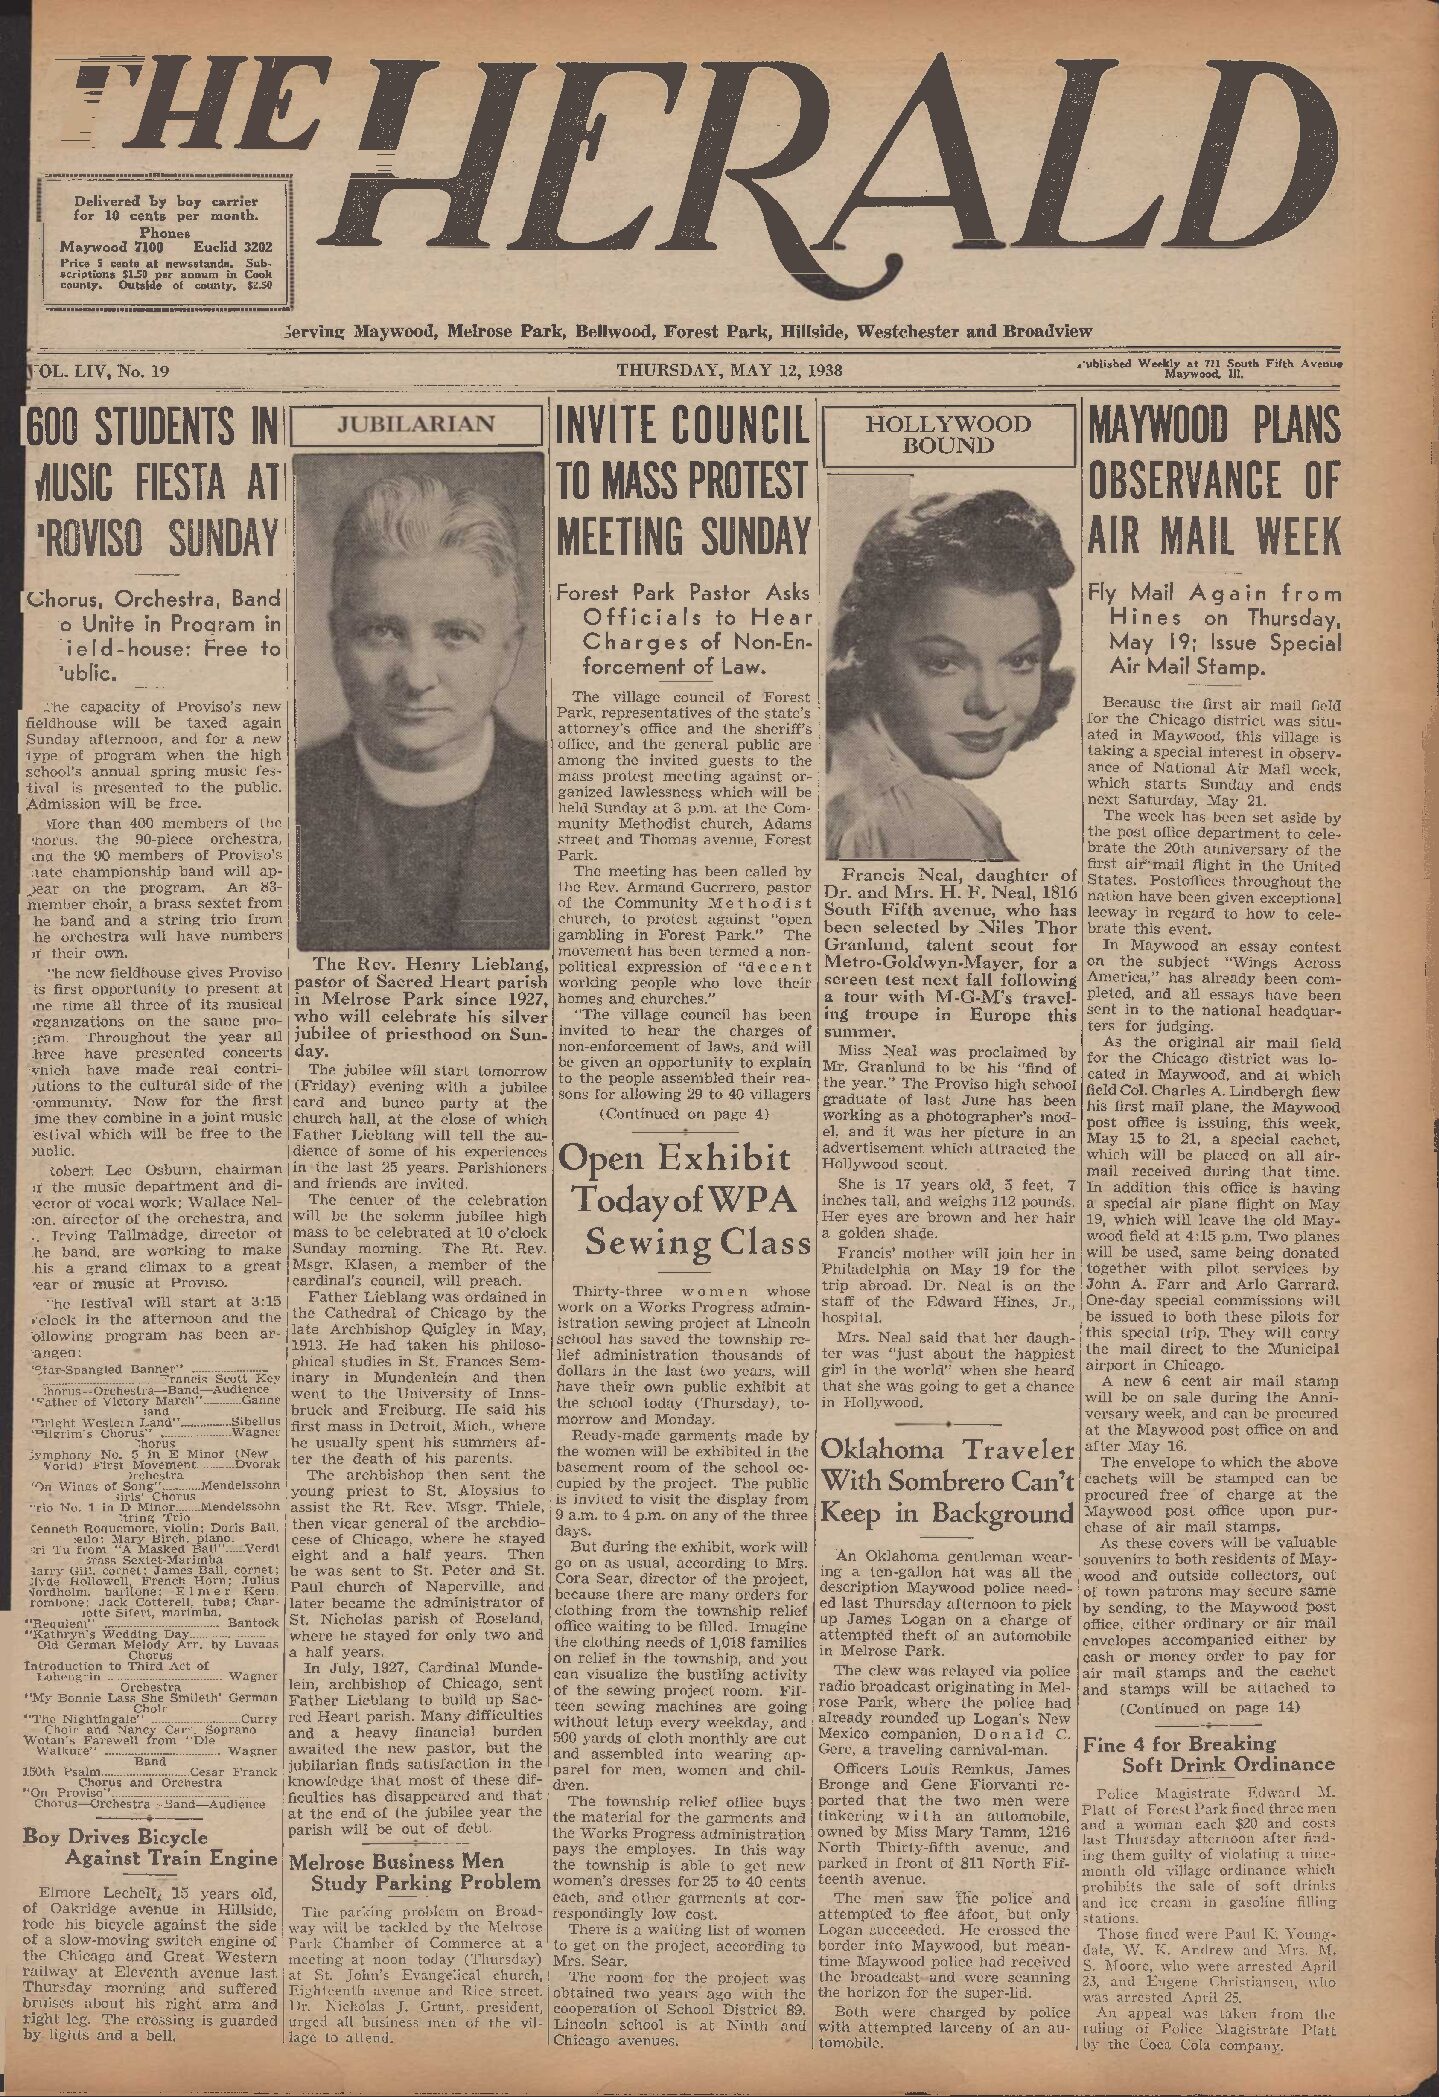 The Herald – 19380512